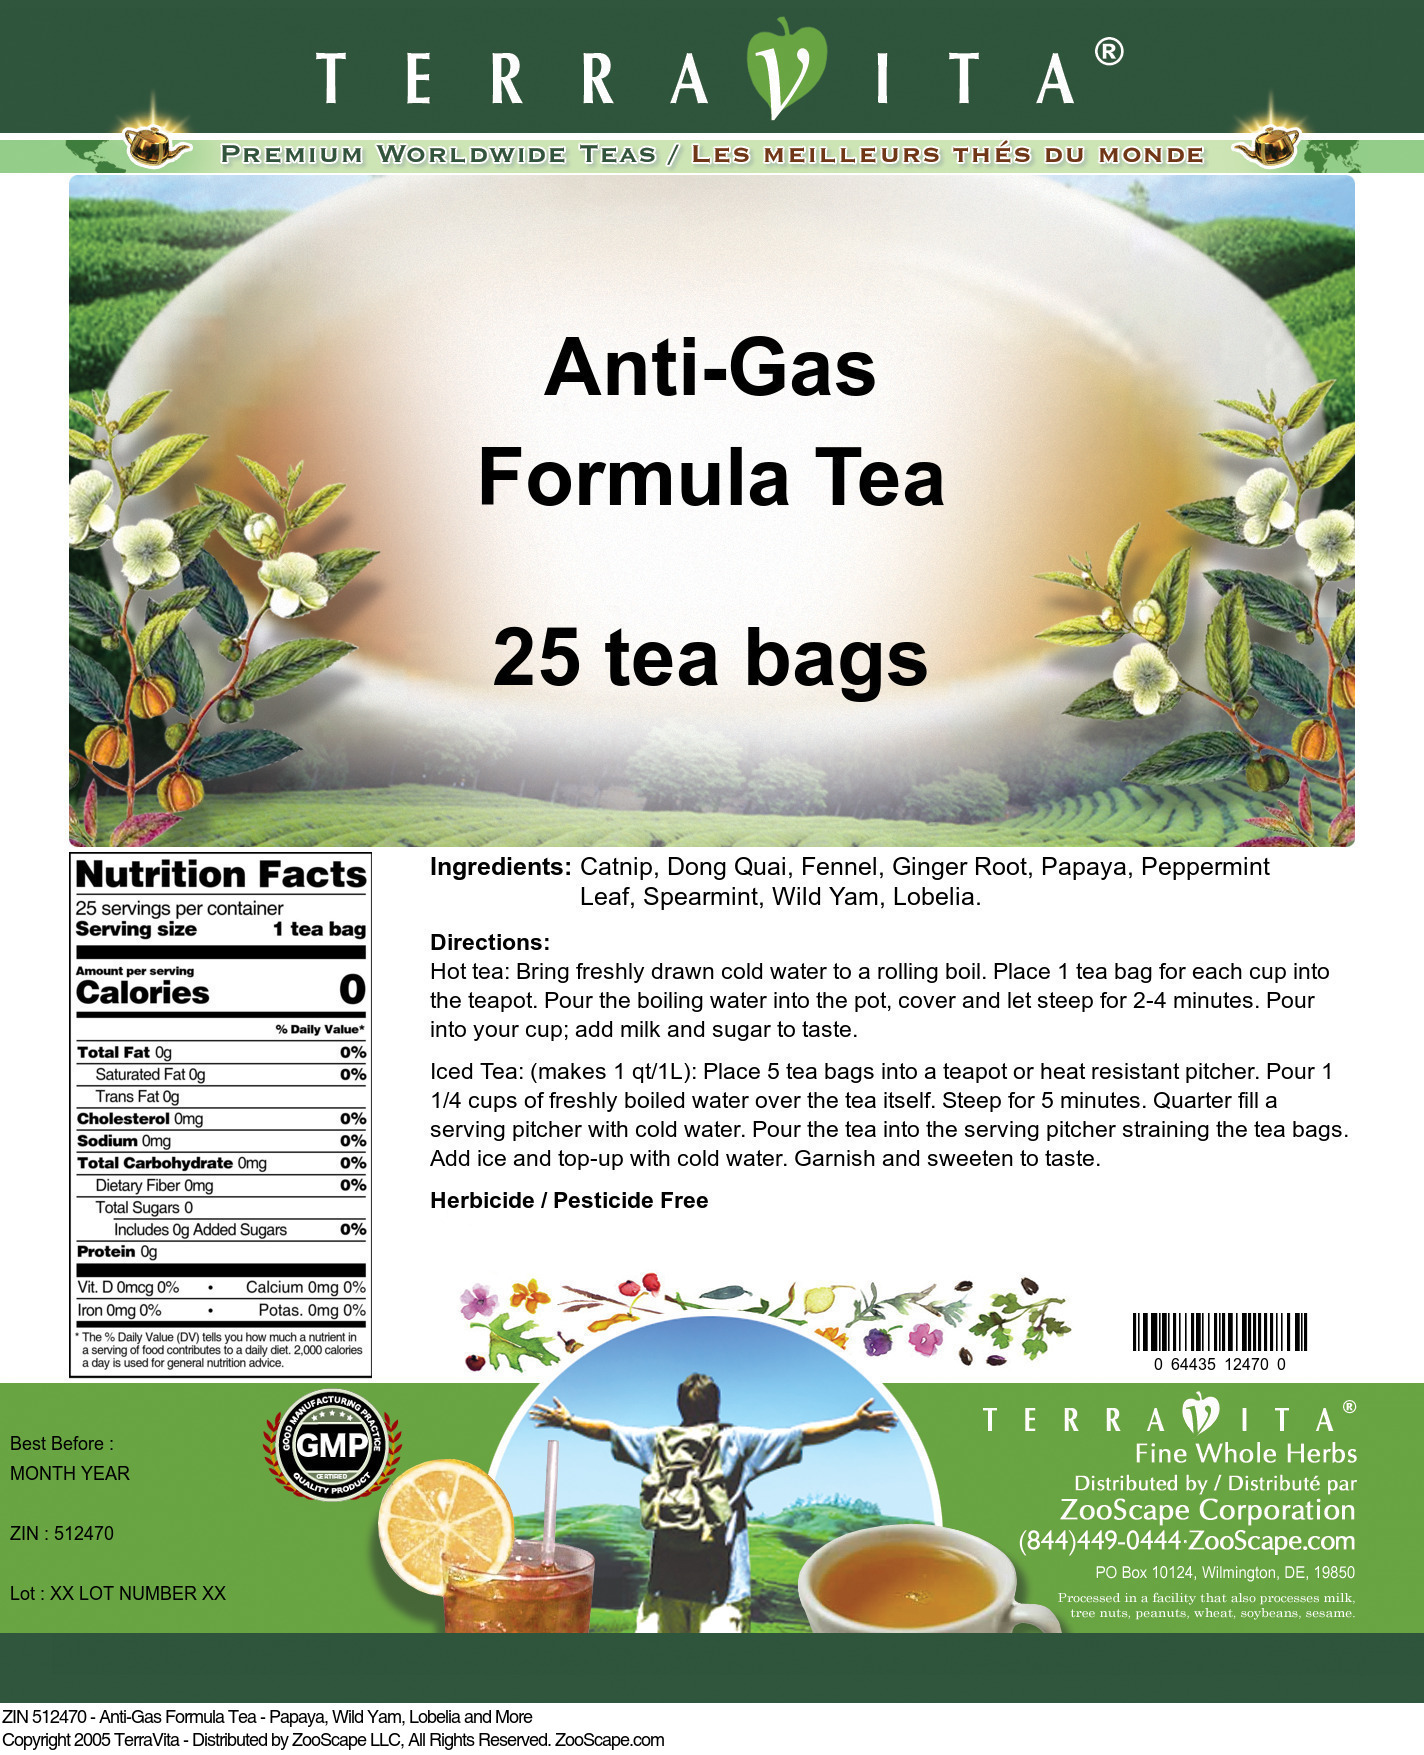 Anti-Gas Formula Tea - Papaya, Wild Yam, Lobelia and More - Label